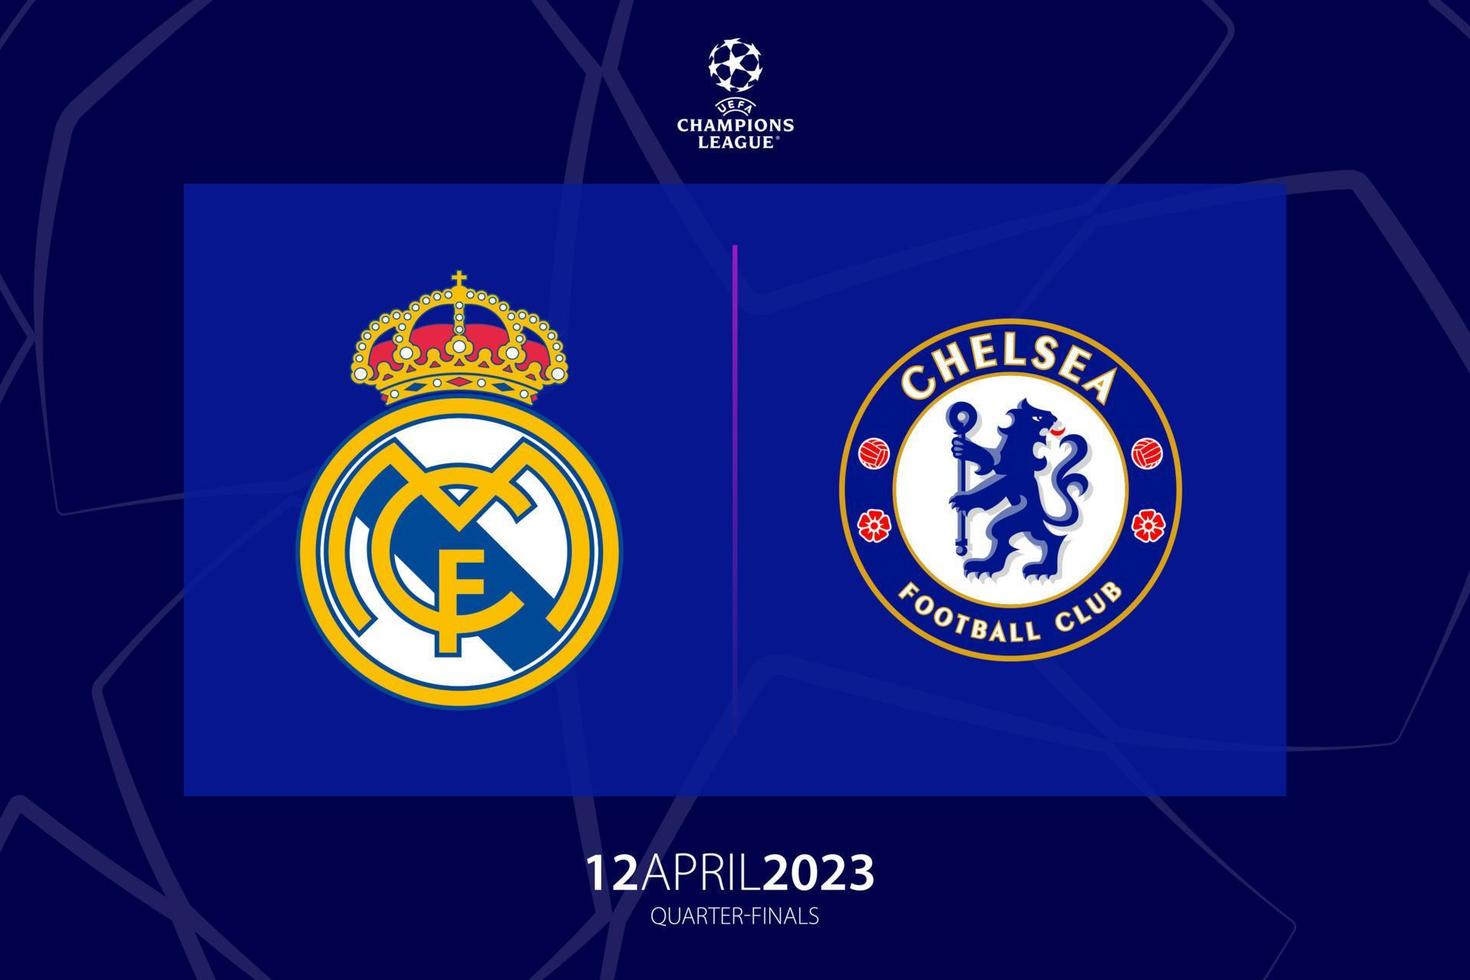 UEFA Champions League 2023 quarter-final between Real Madrid versus Chelsea, game one. Tbilisi, Georgia - April 06, 2023. vector